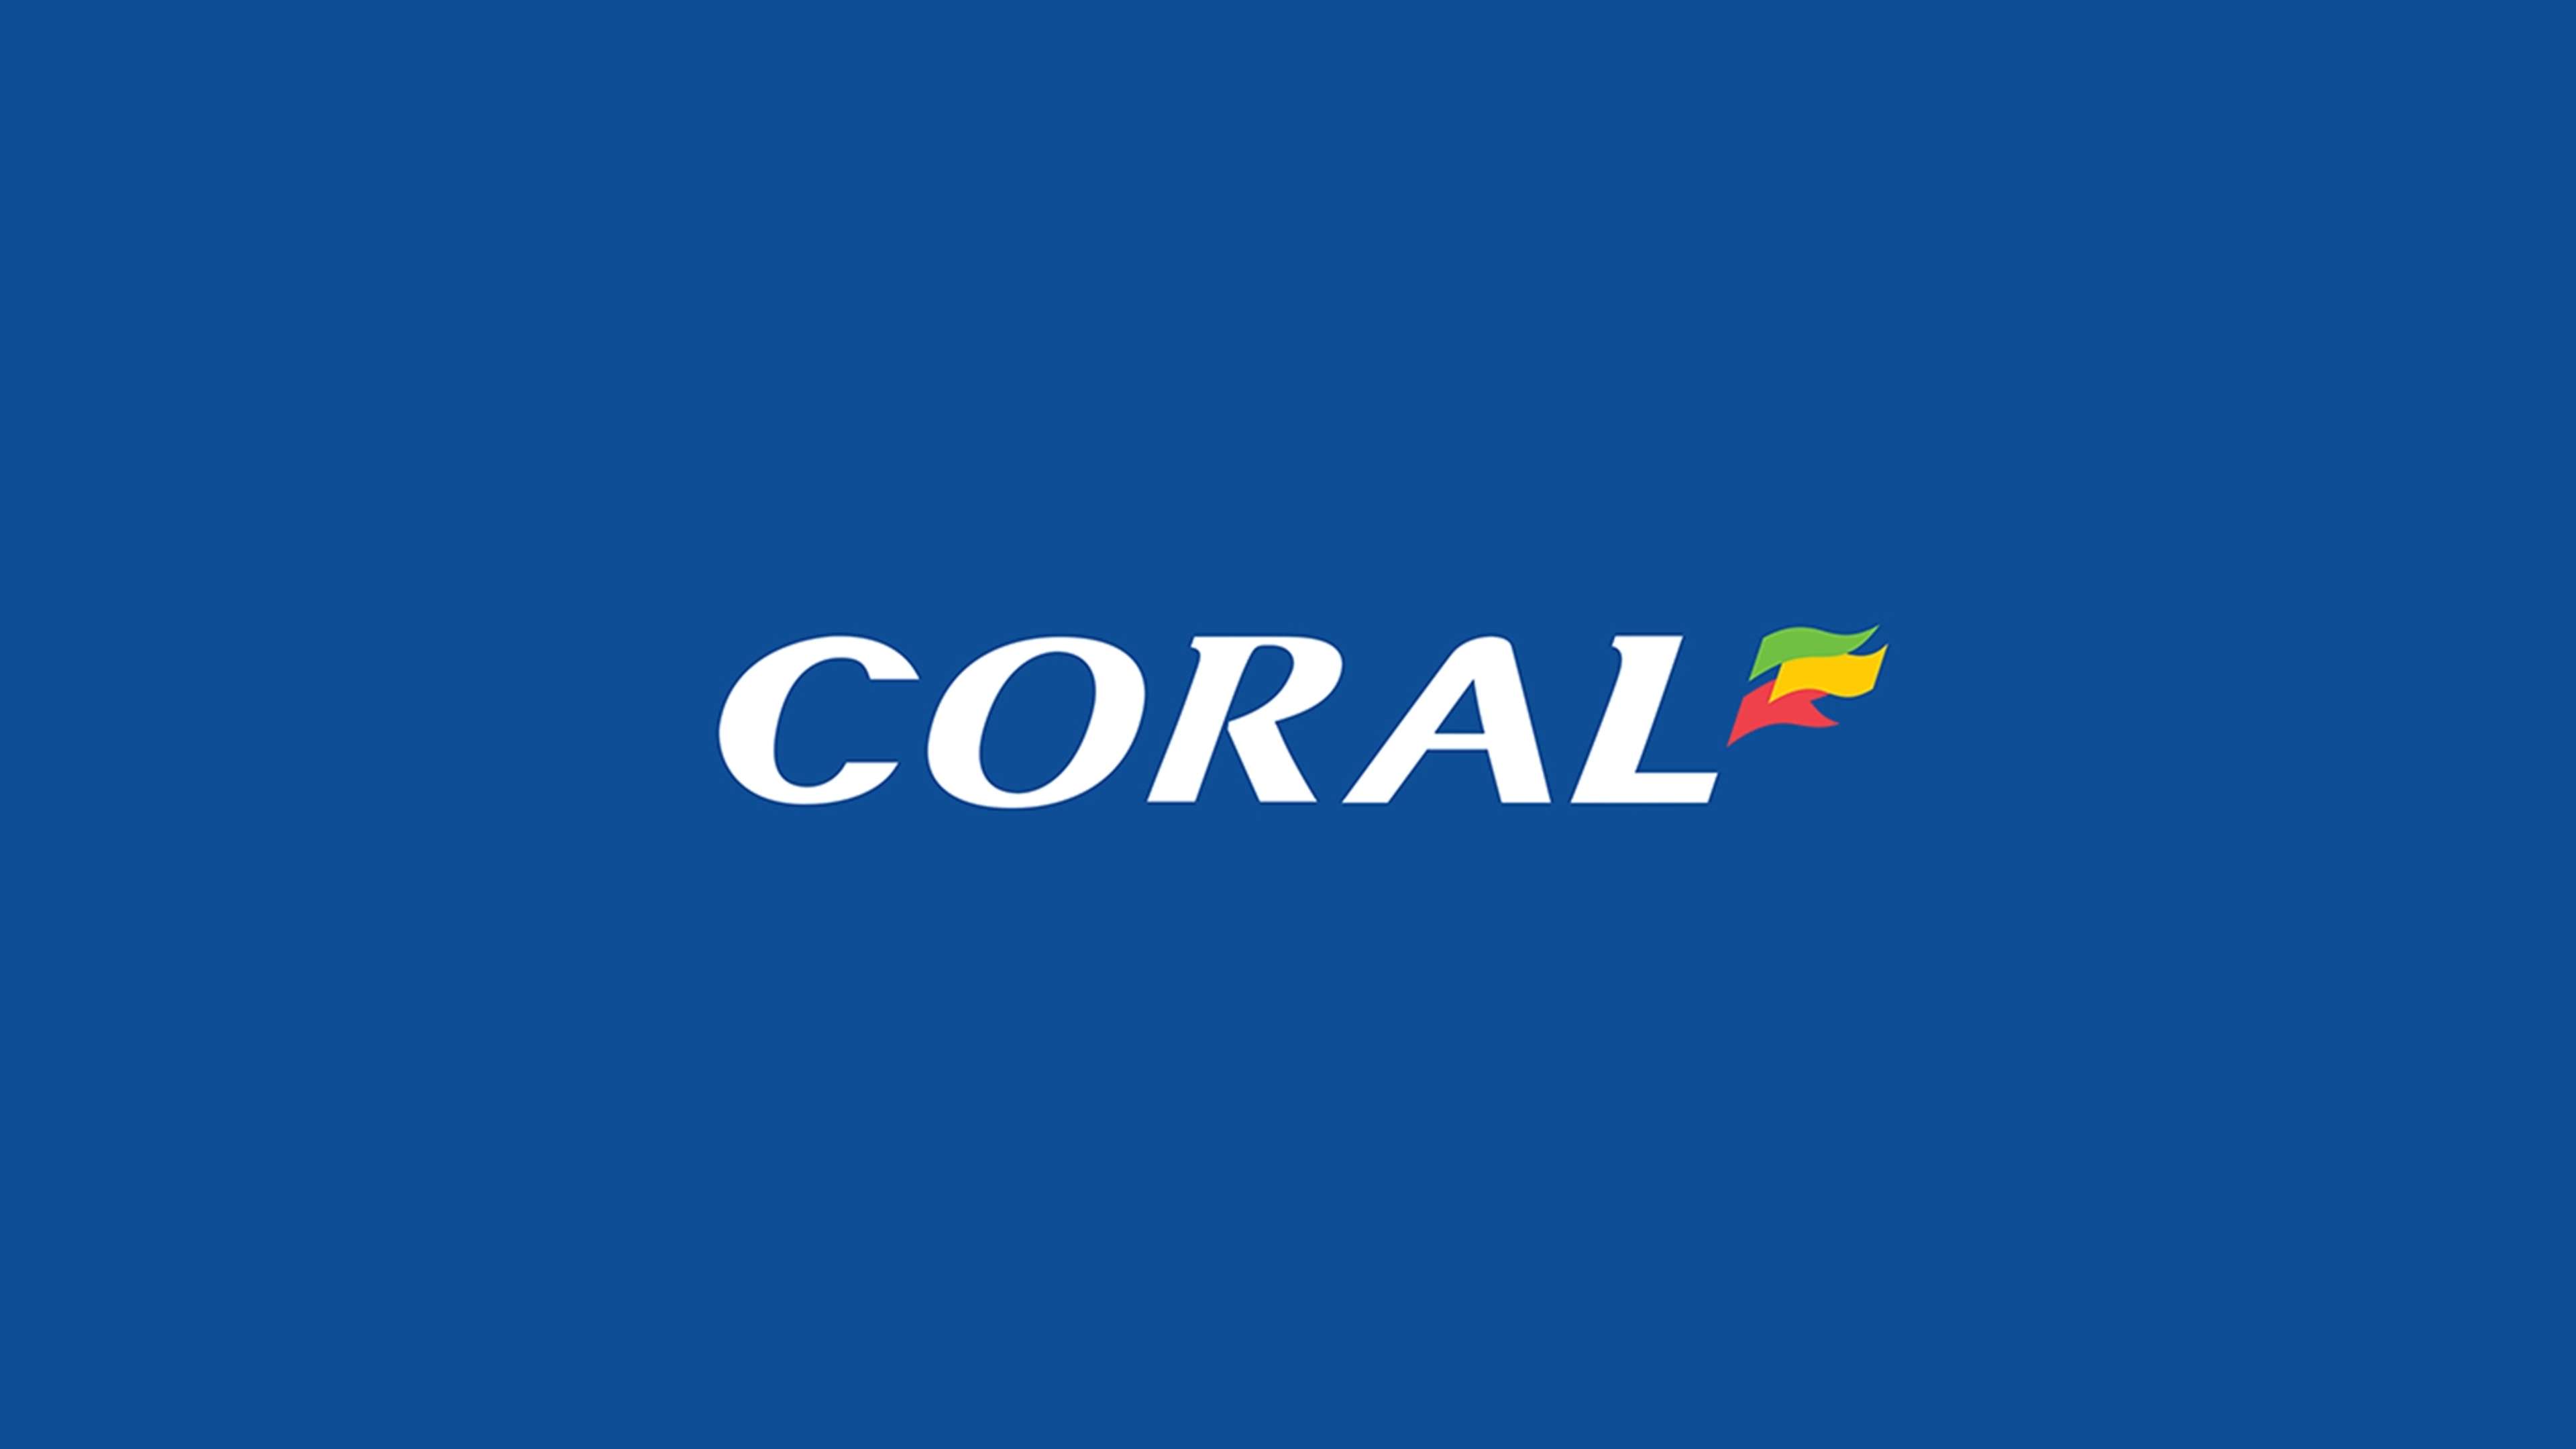 Coral sign up offer